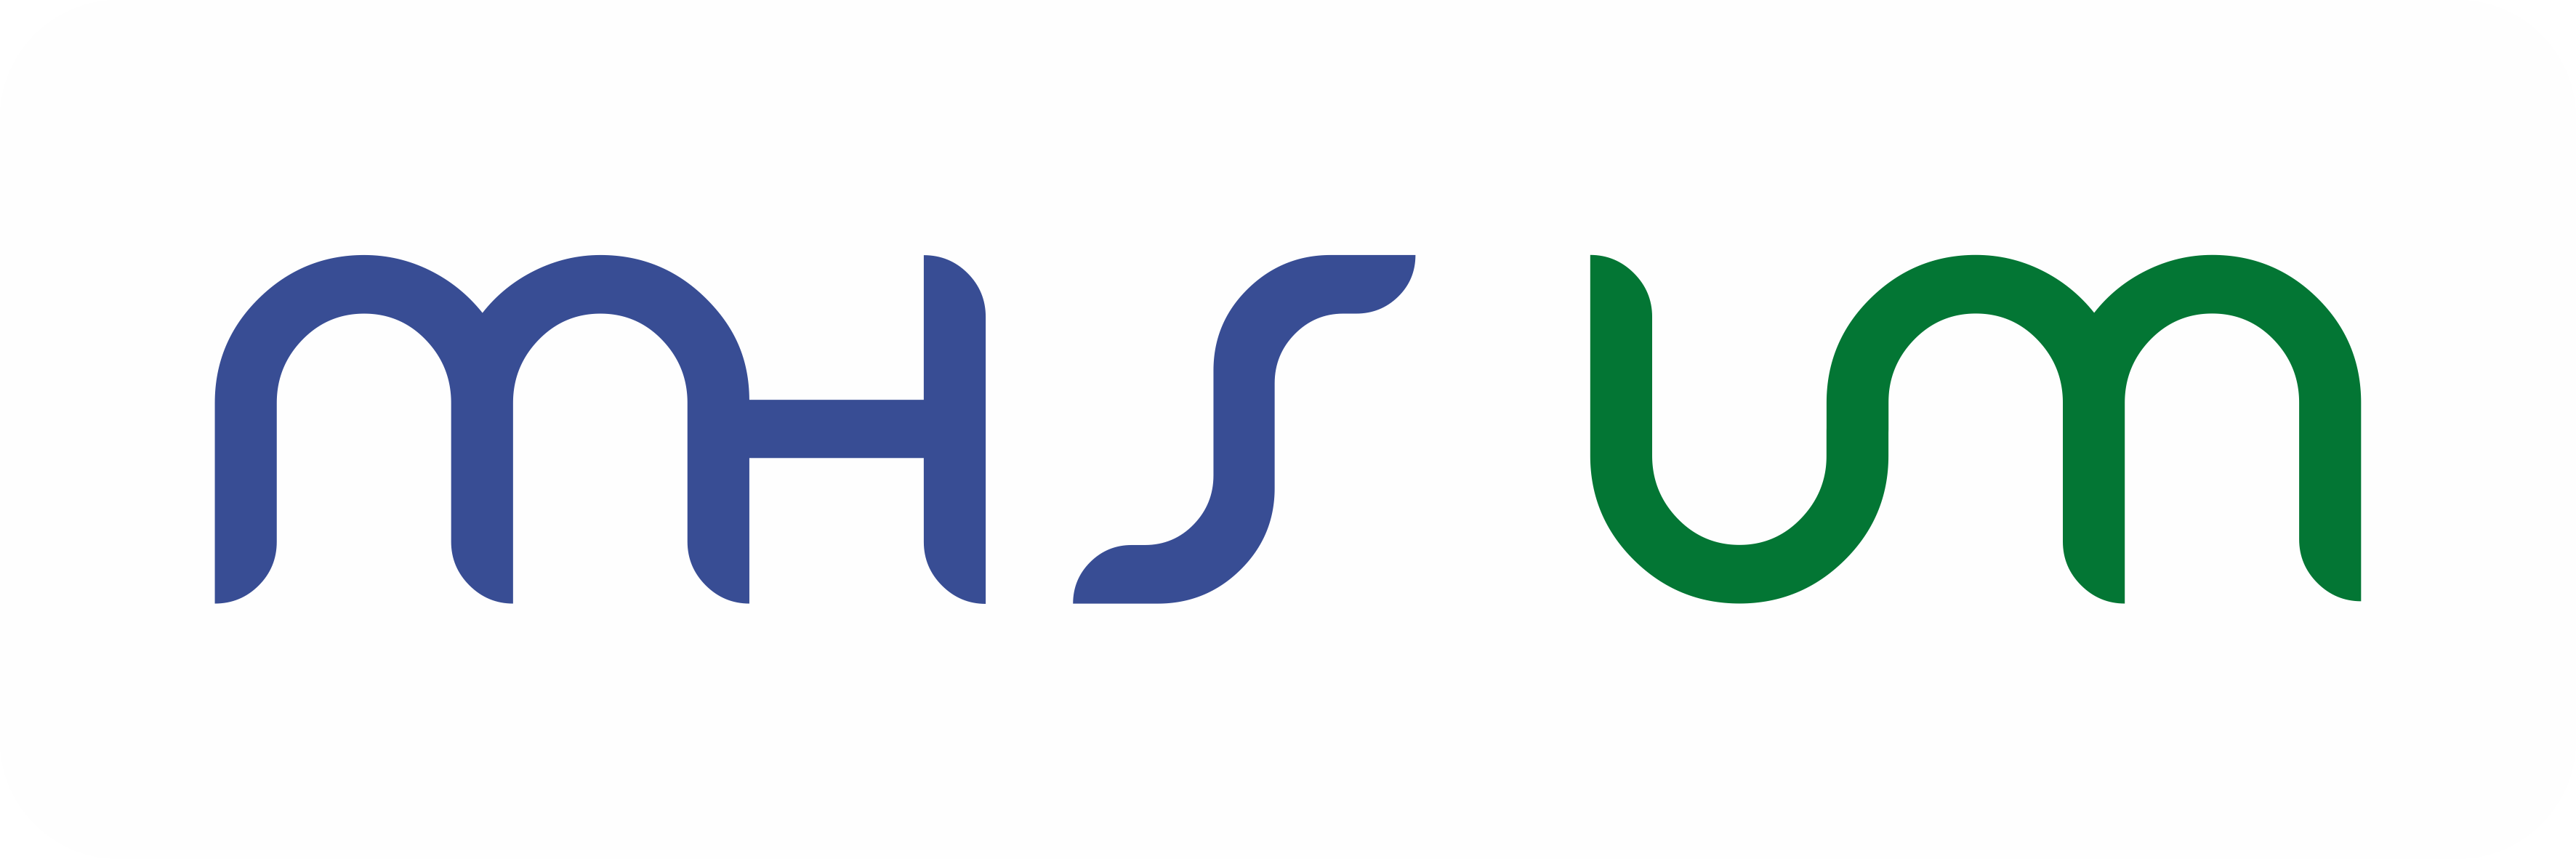 Logo New Mhs Um - Logo Mahasiswa Um Clipart (3544x1182), Png Download